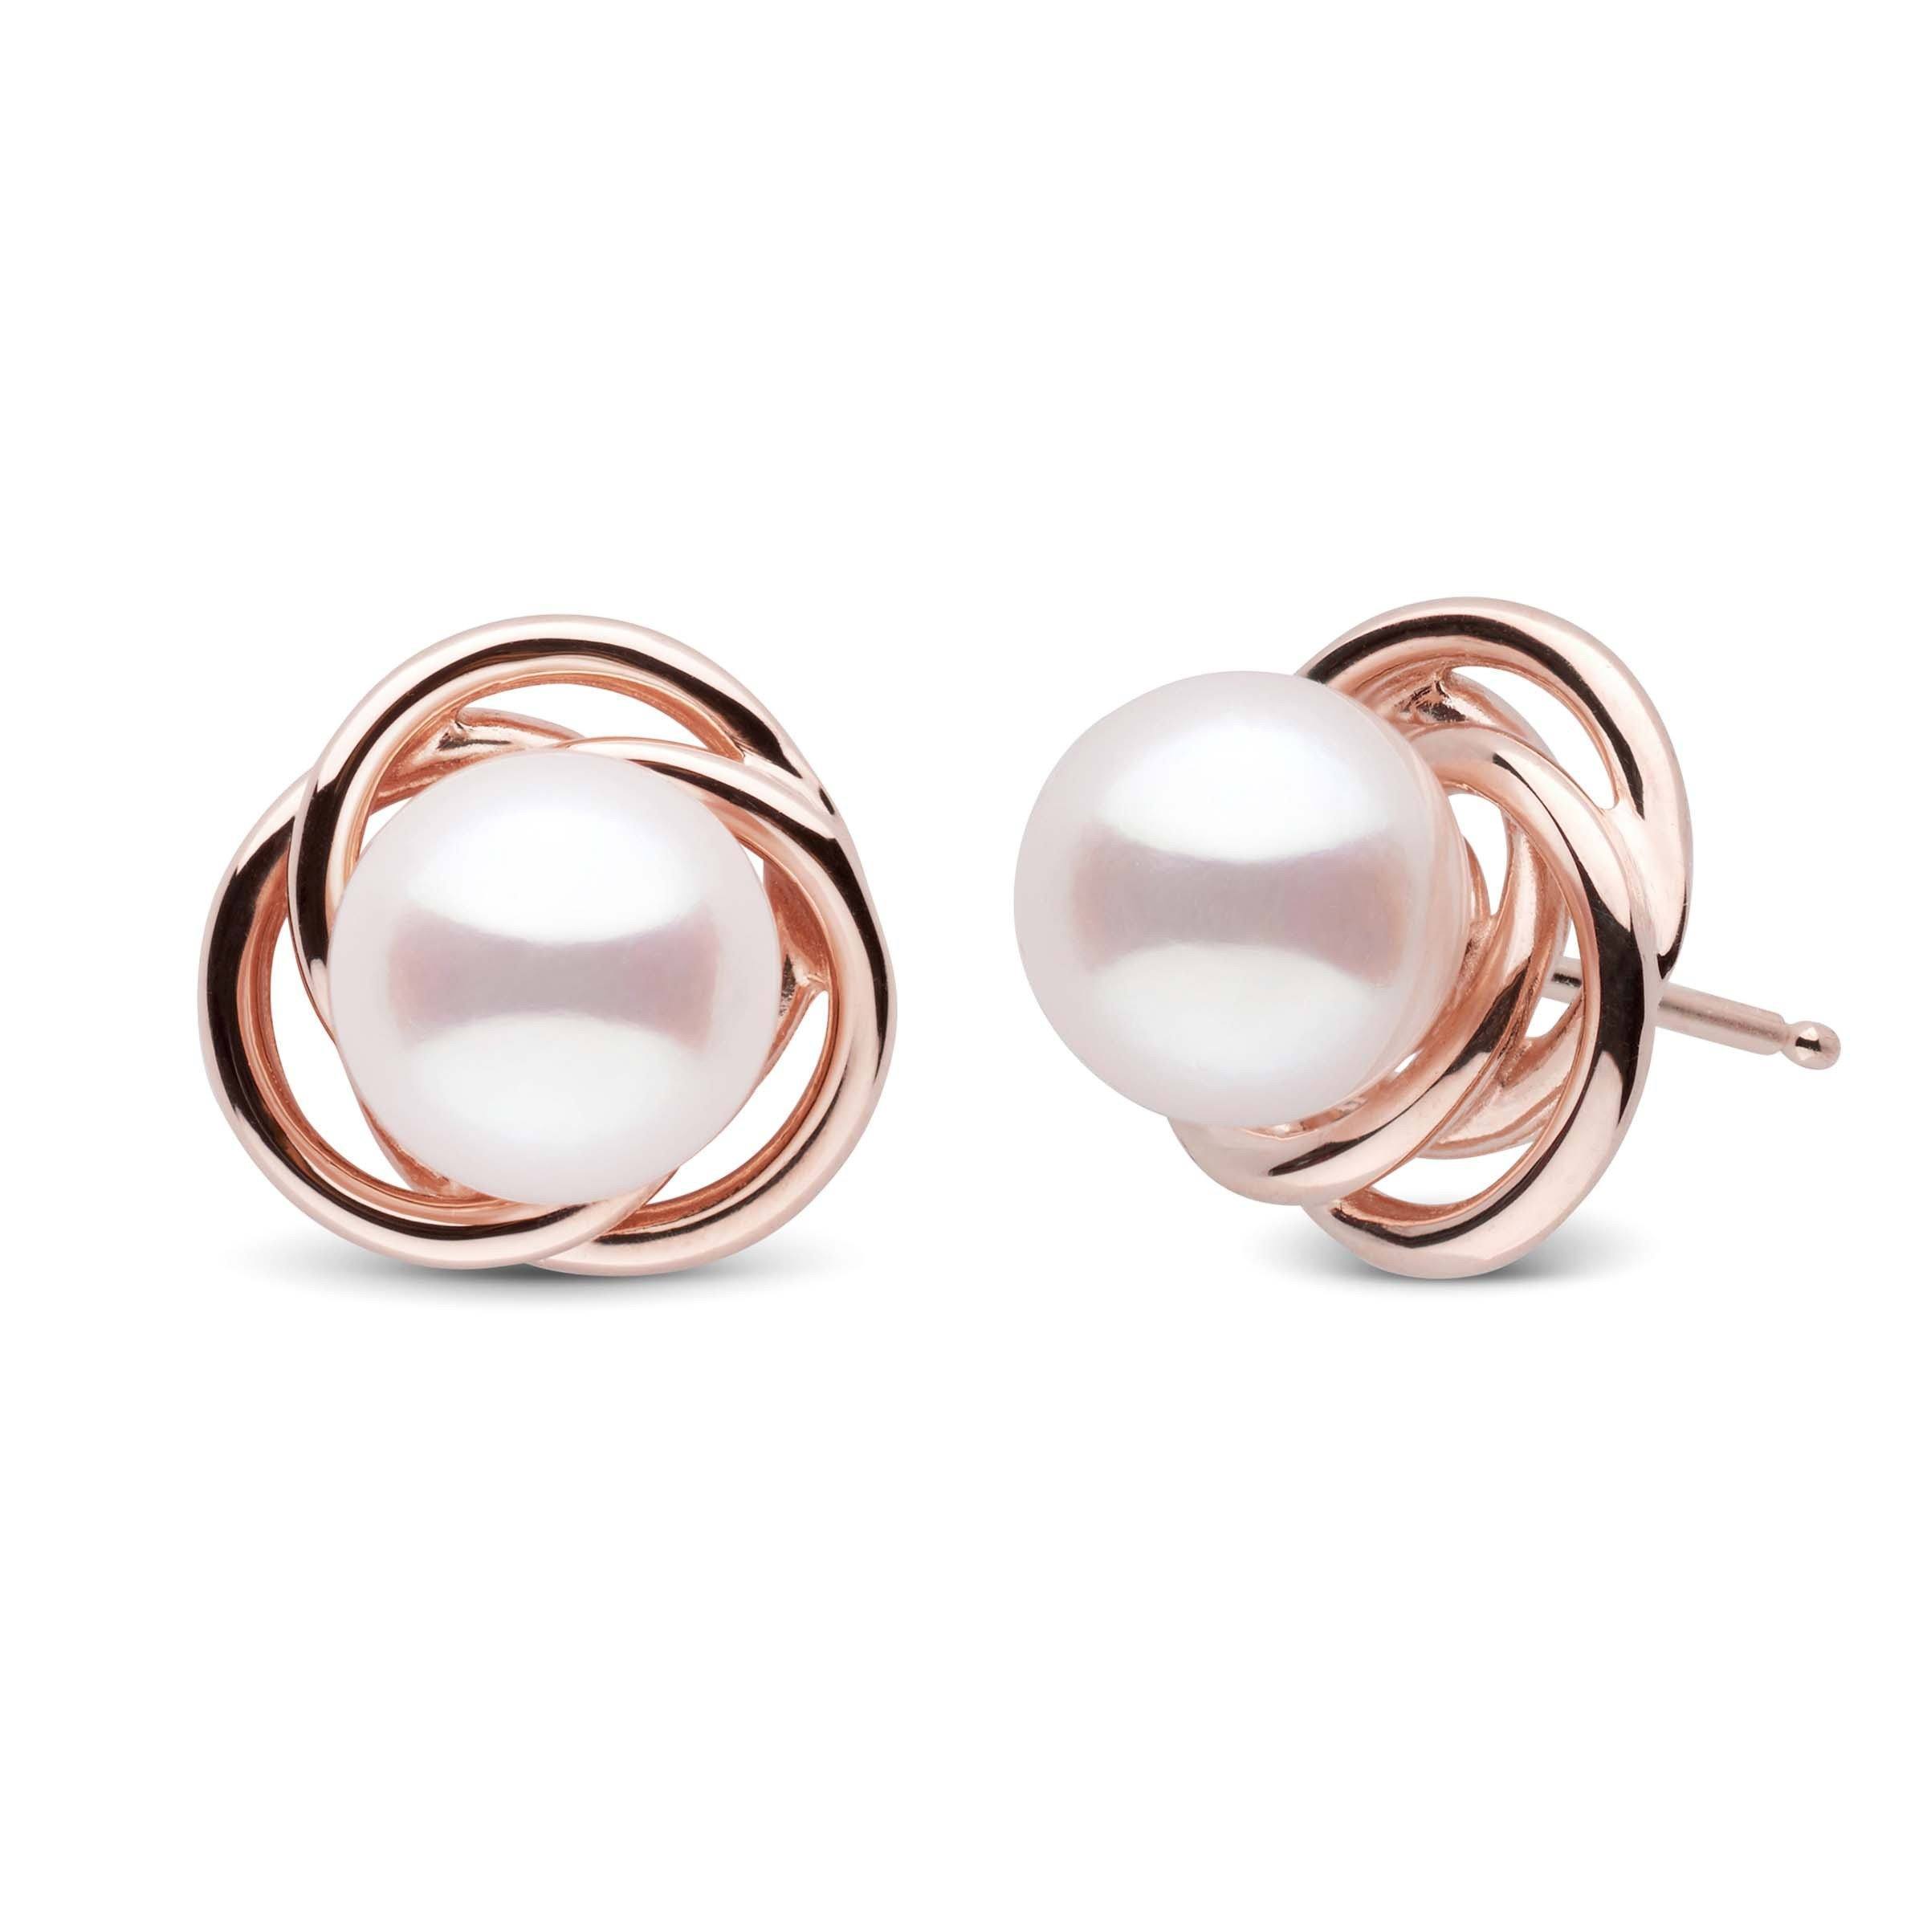 Buy Rose Gold Rose Flower & Pearl Stud Earrings for Women at Amazon.in